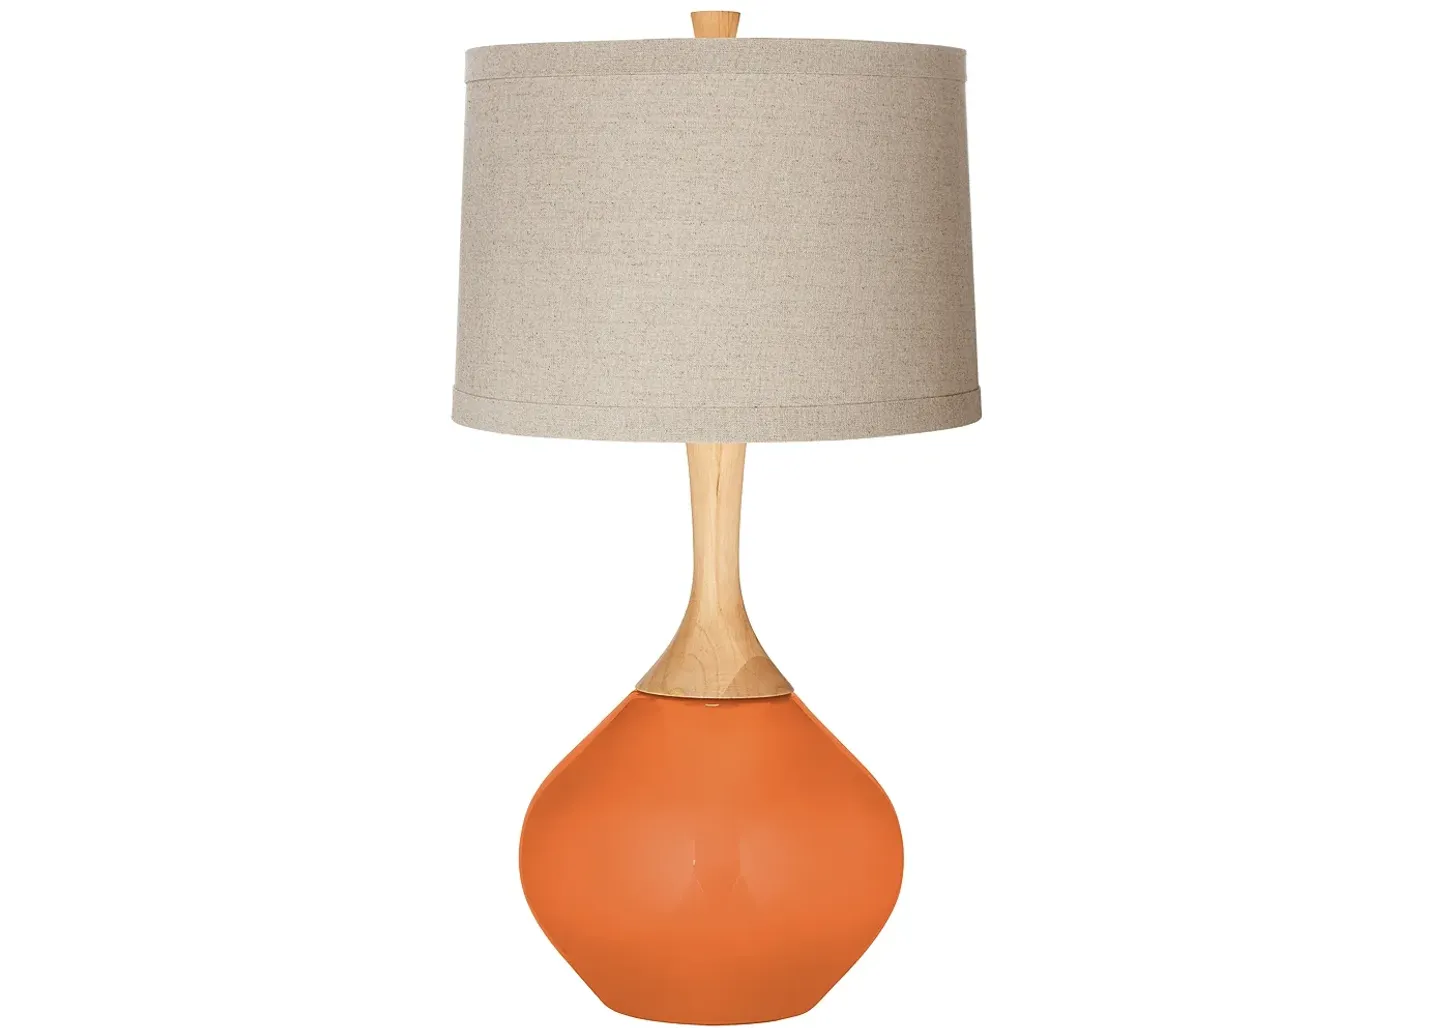 Color Plus Celosia Orange Natural Linen Drum Shade Wexler Table Lamp